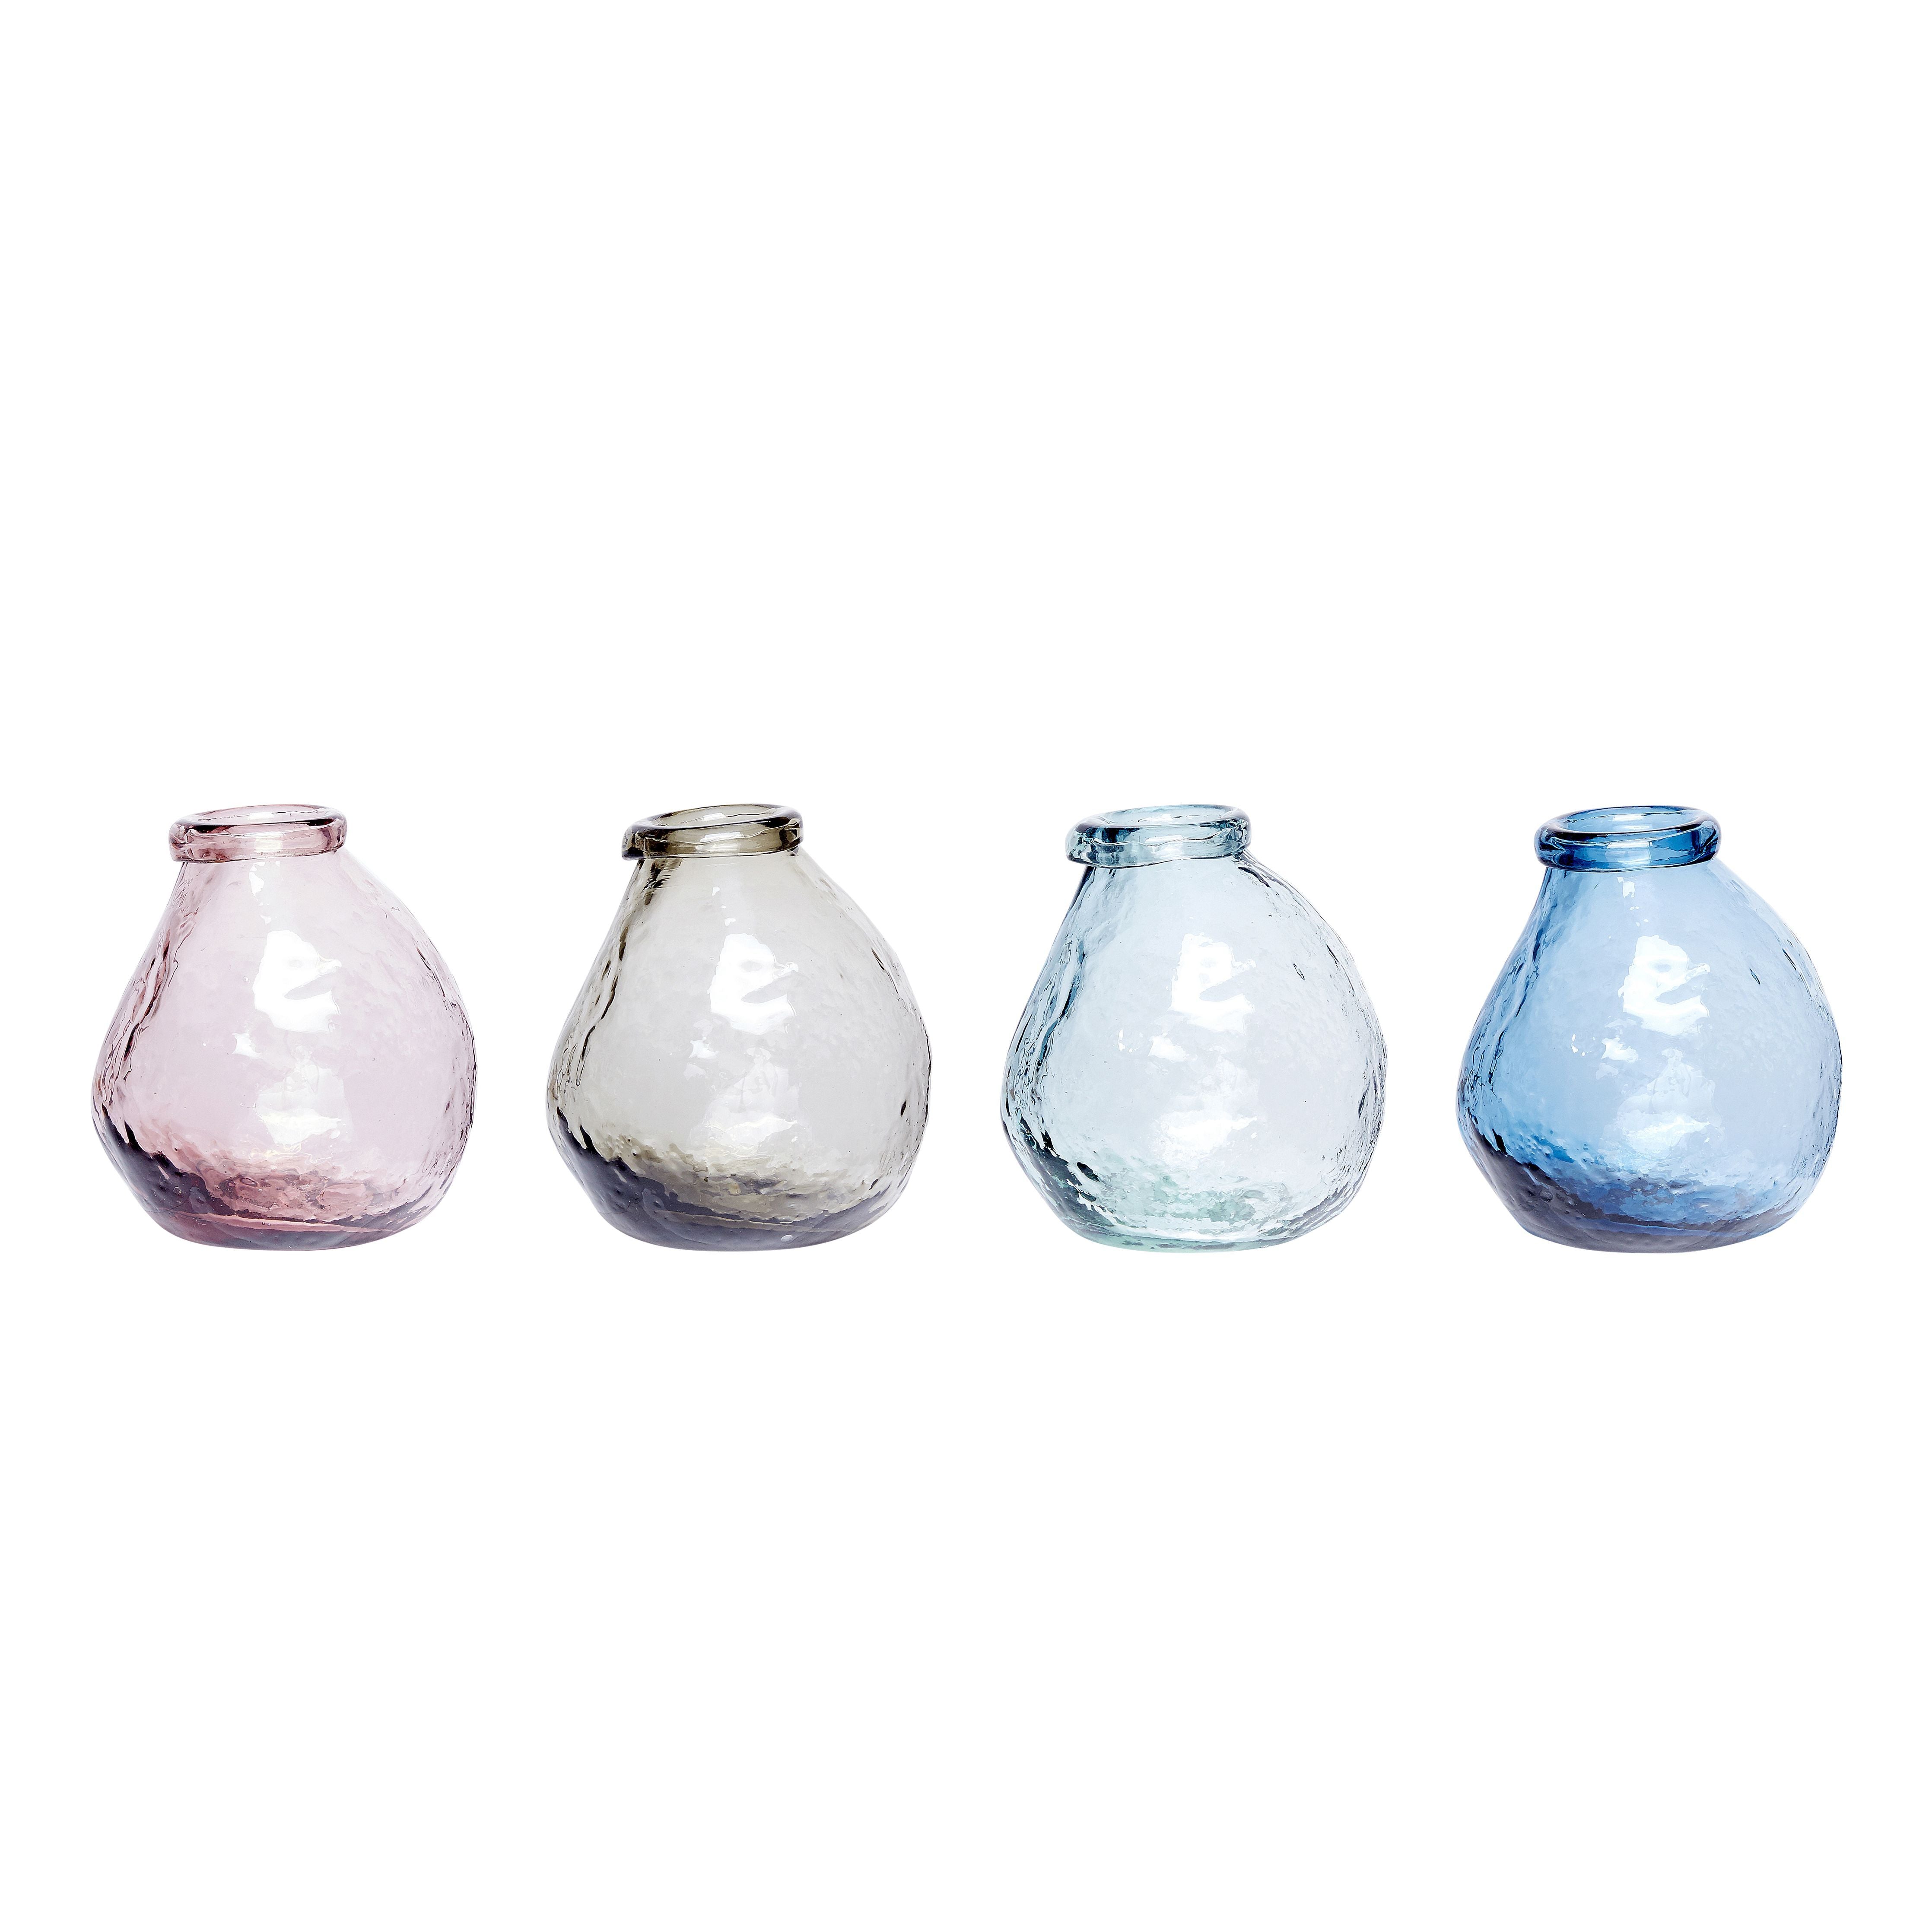 Hübsch Vase Glass Pink/Clear/Blue/Grey Set Of 4, øx H 10x12 Cm